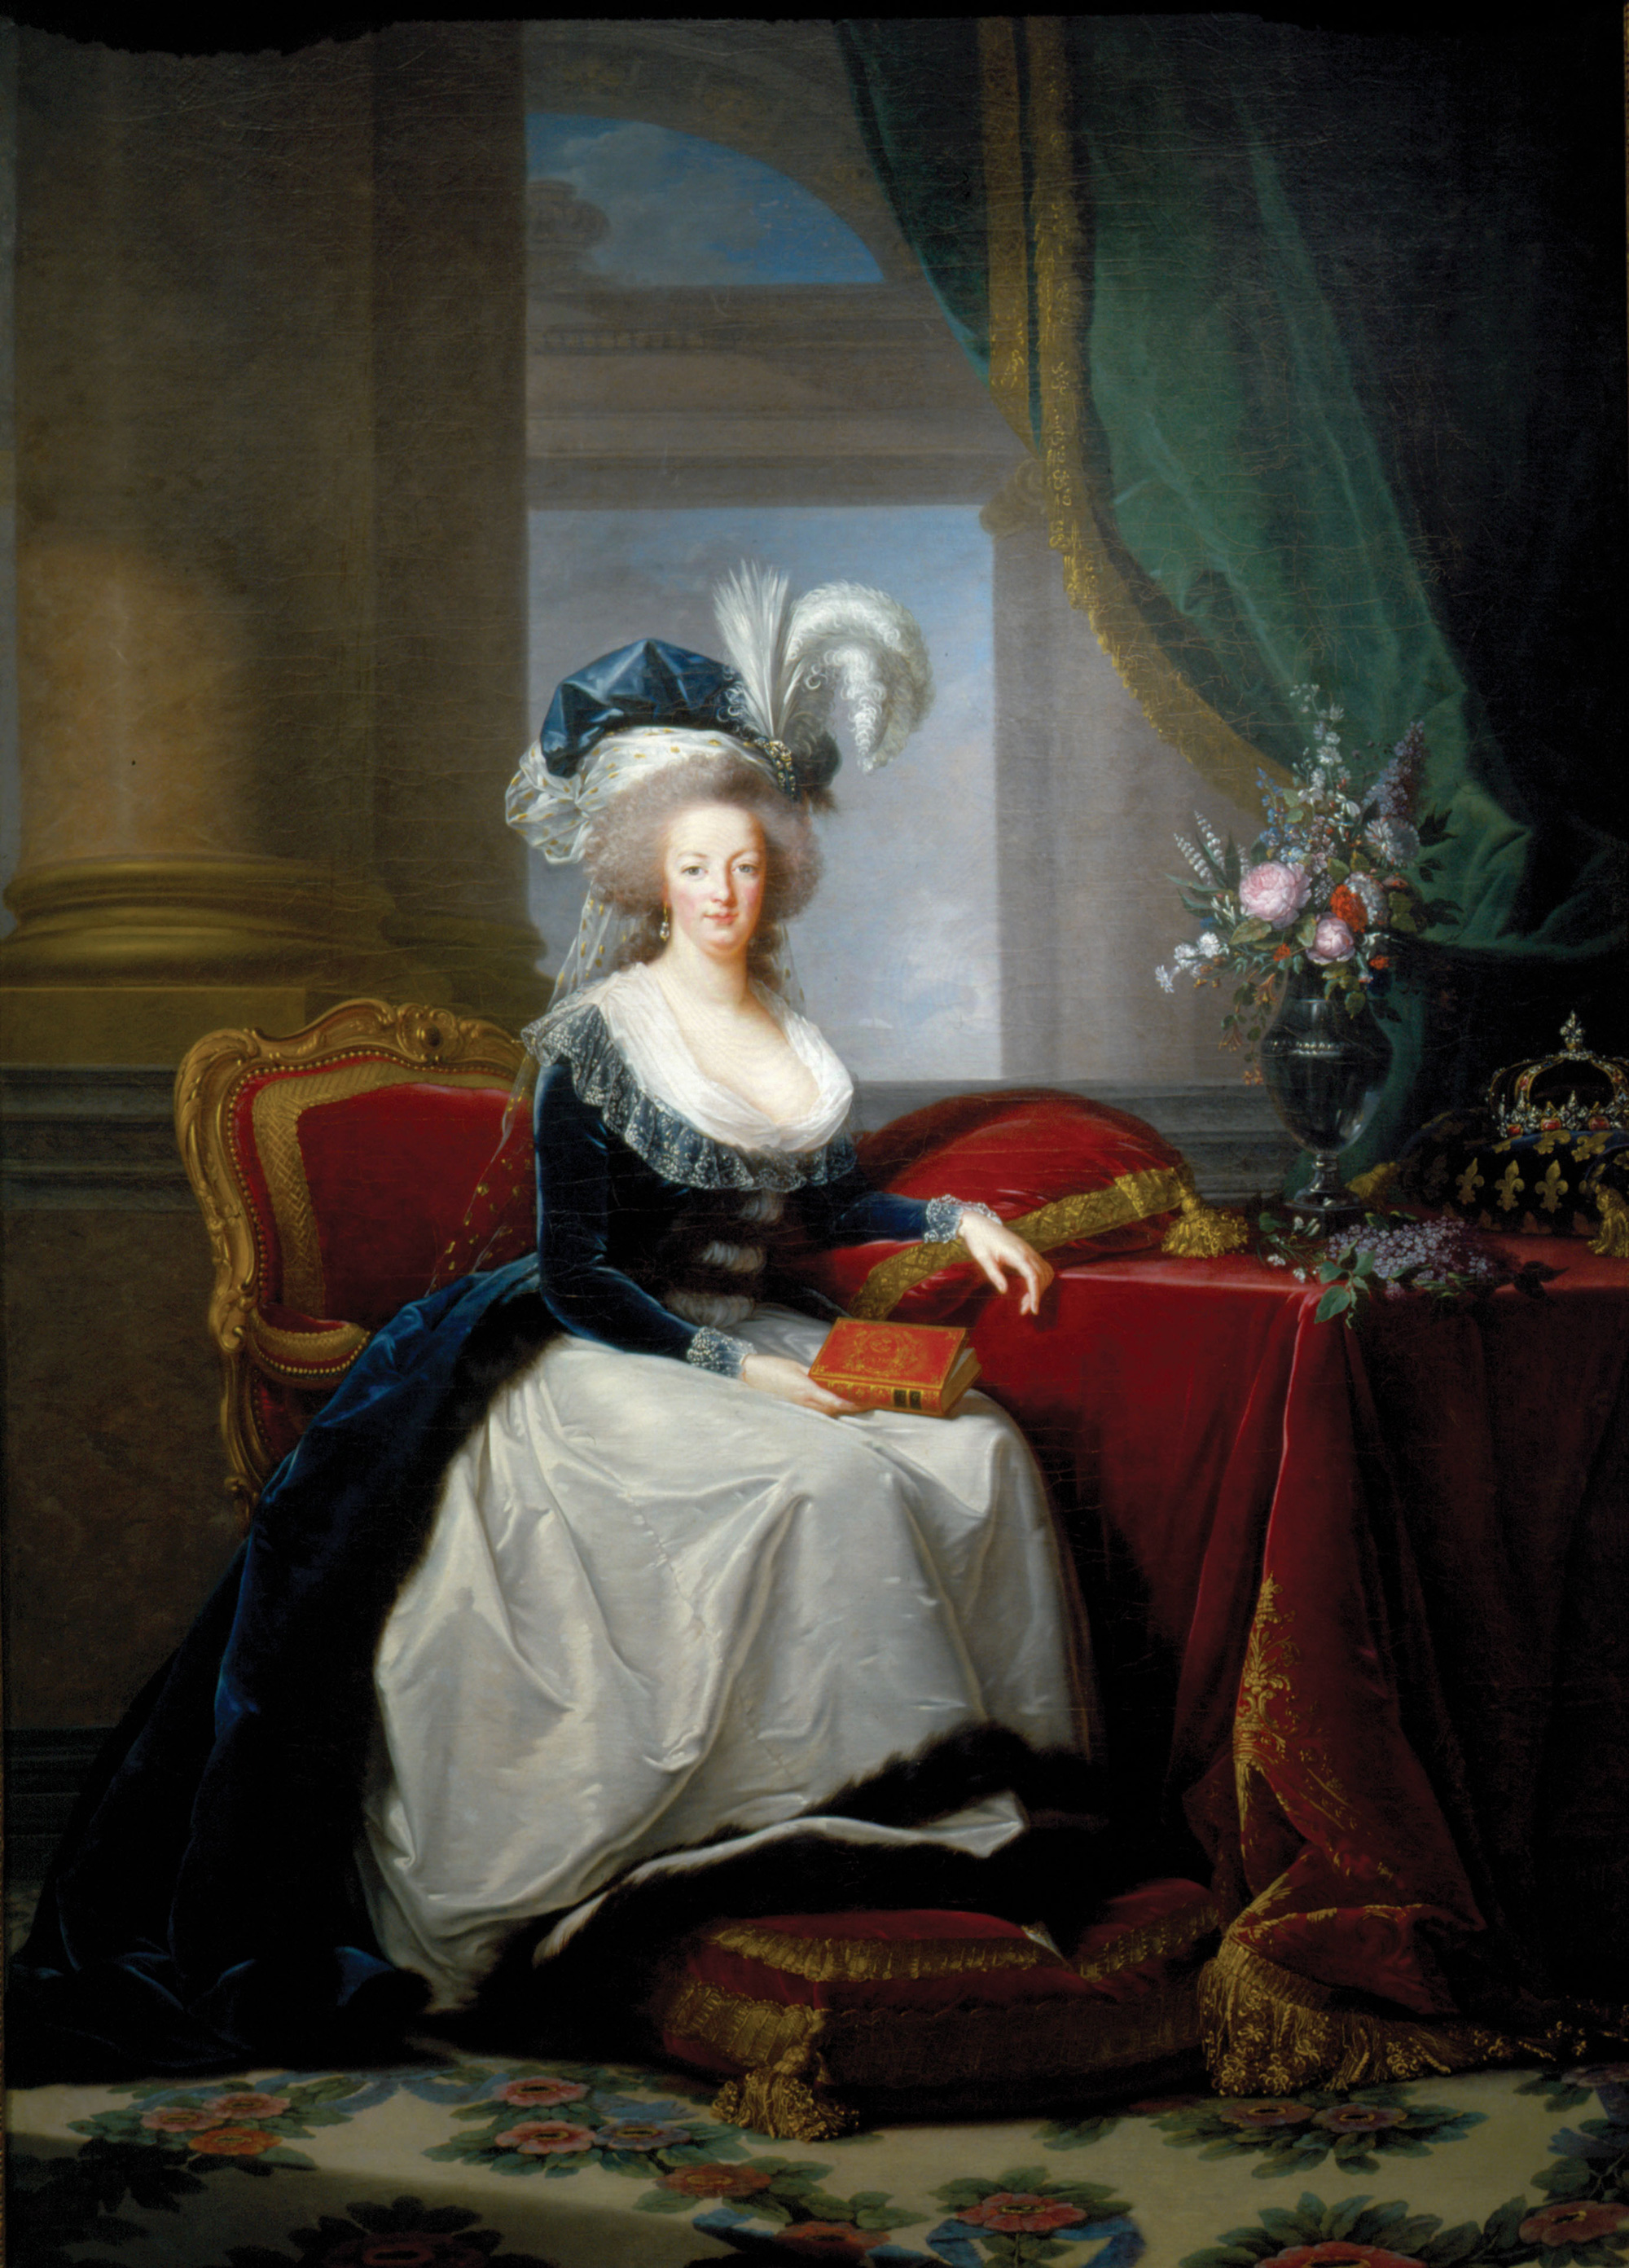 Ritratto di Maria Antonietta, regina di Francia by Élisabeth Vigee Le Brun - ca. 1788 - 278,13 x 191,77 cm 